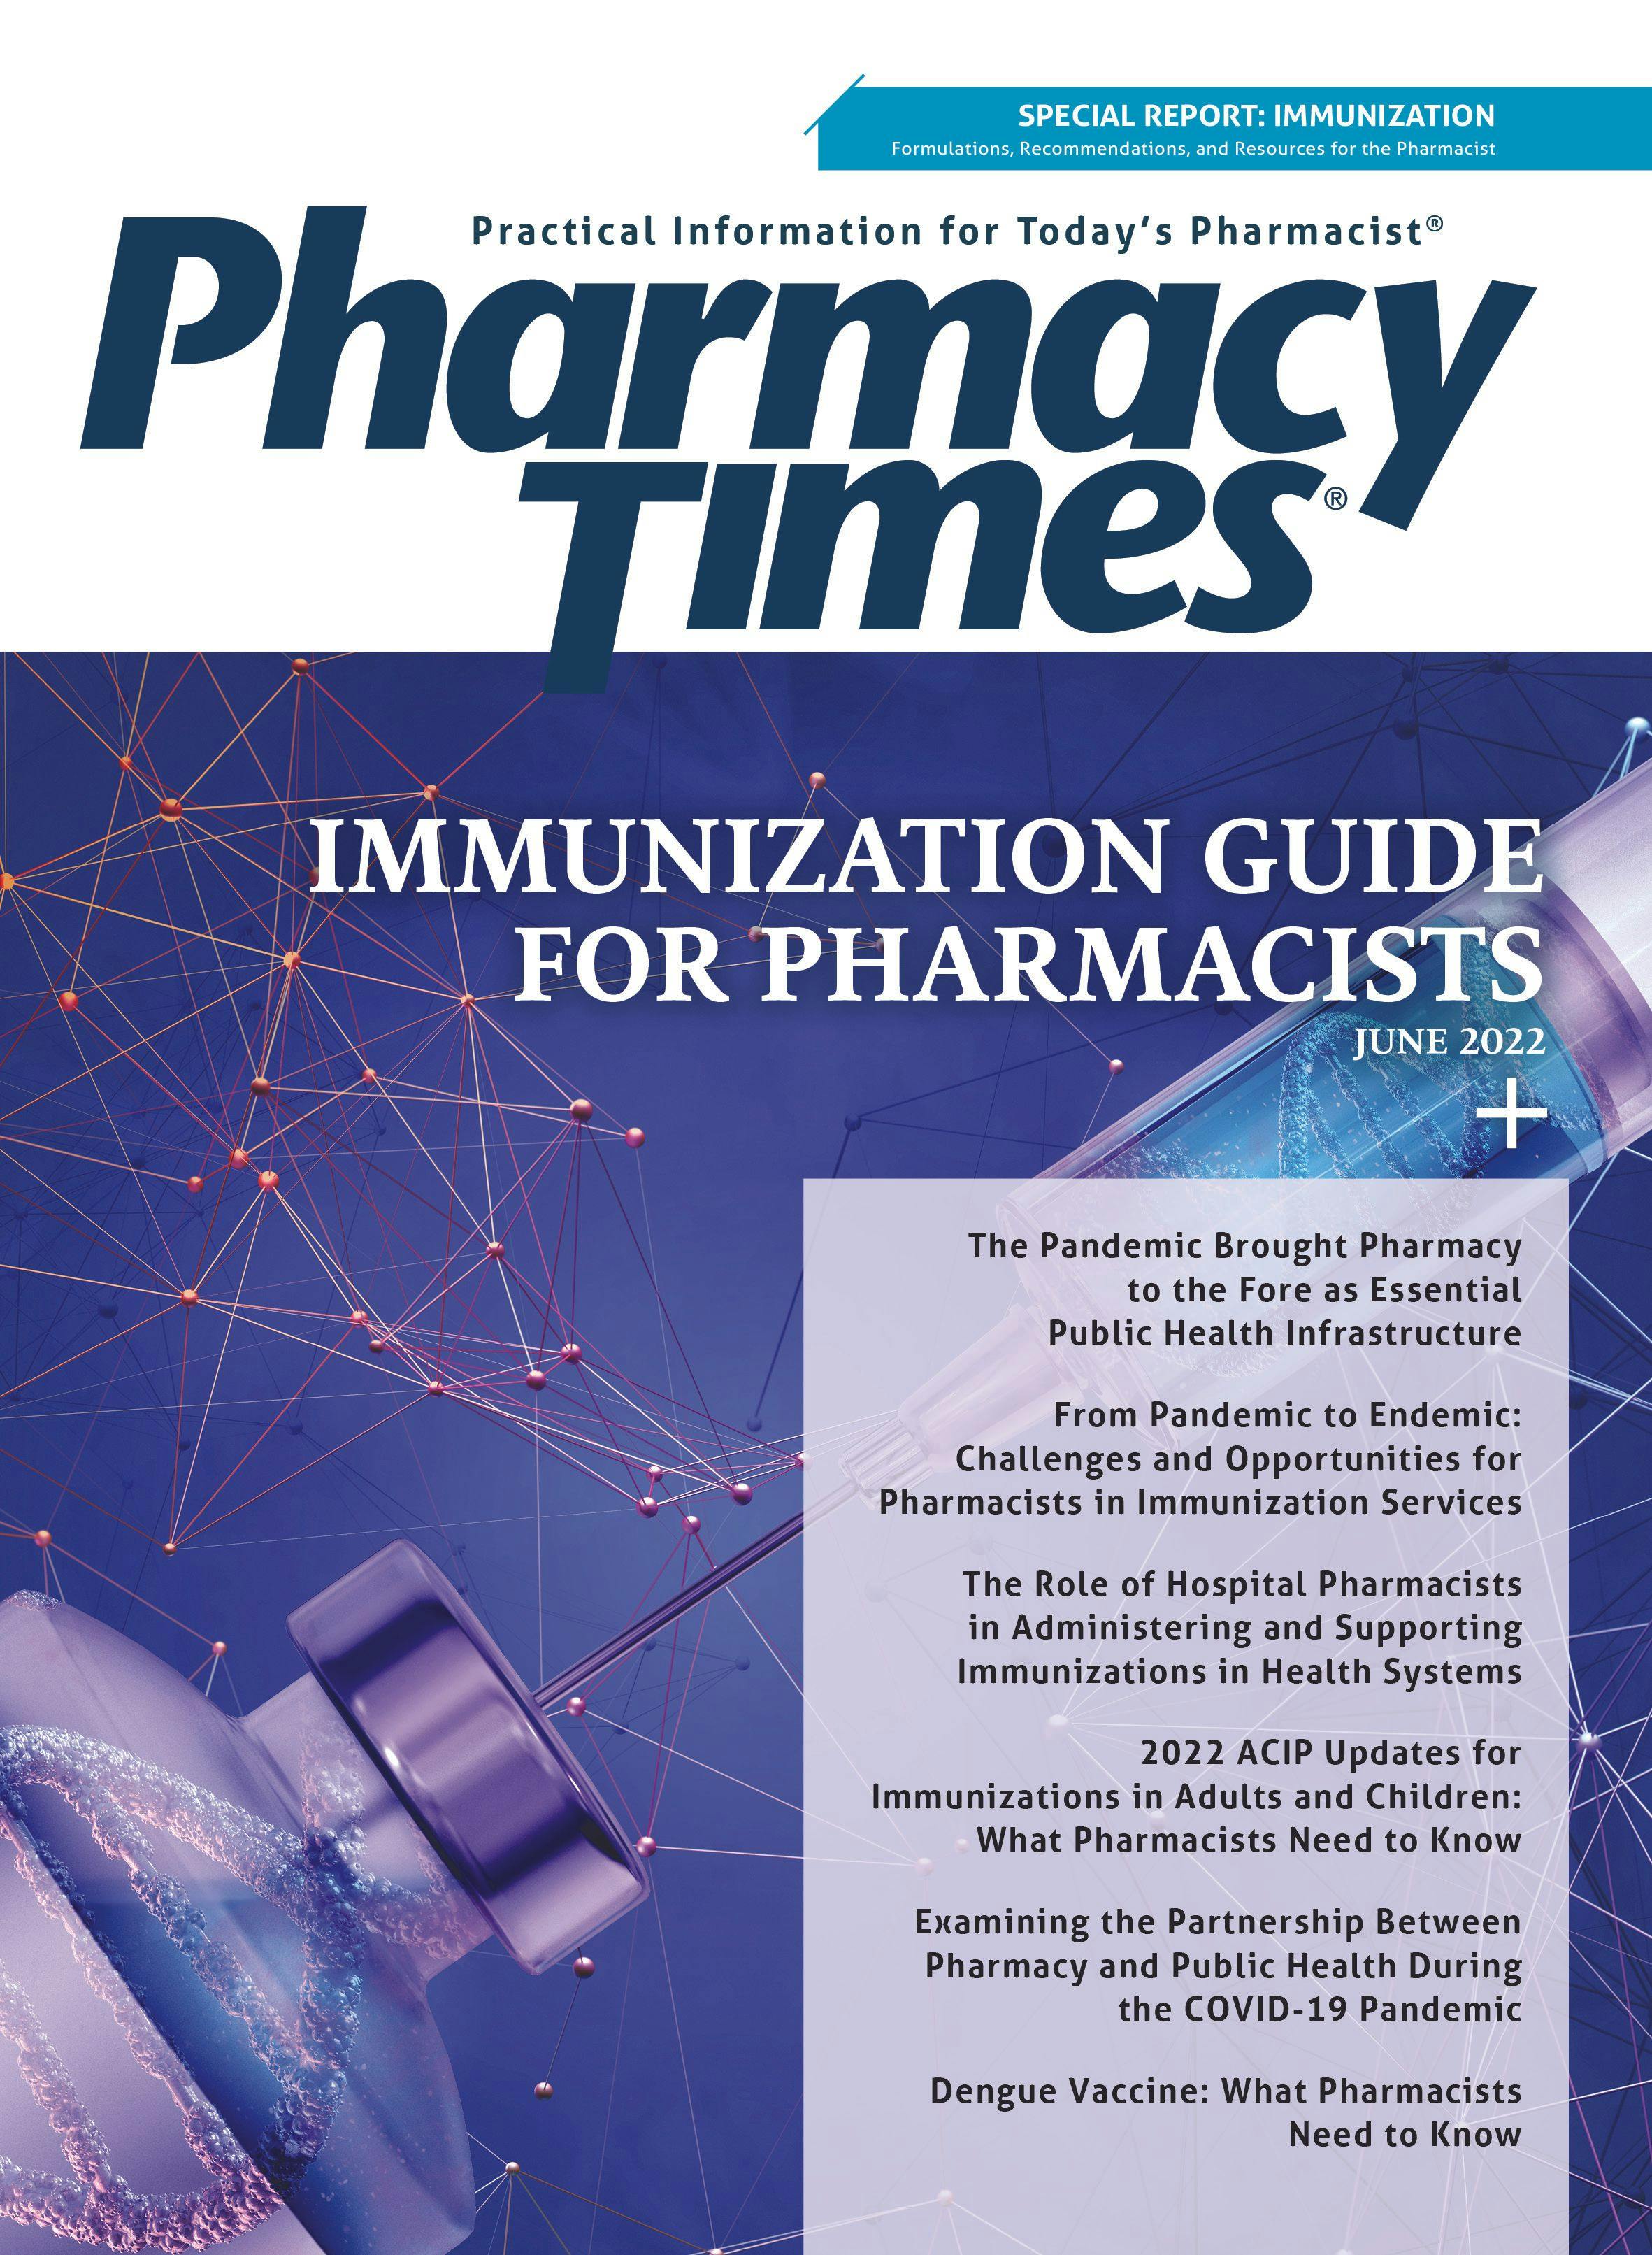 June 2022 Immunization Guide for Pharmacists